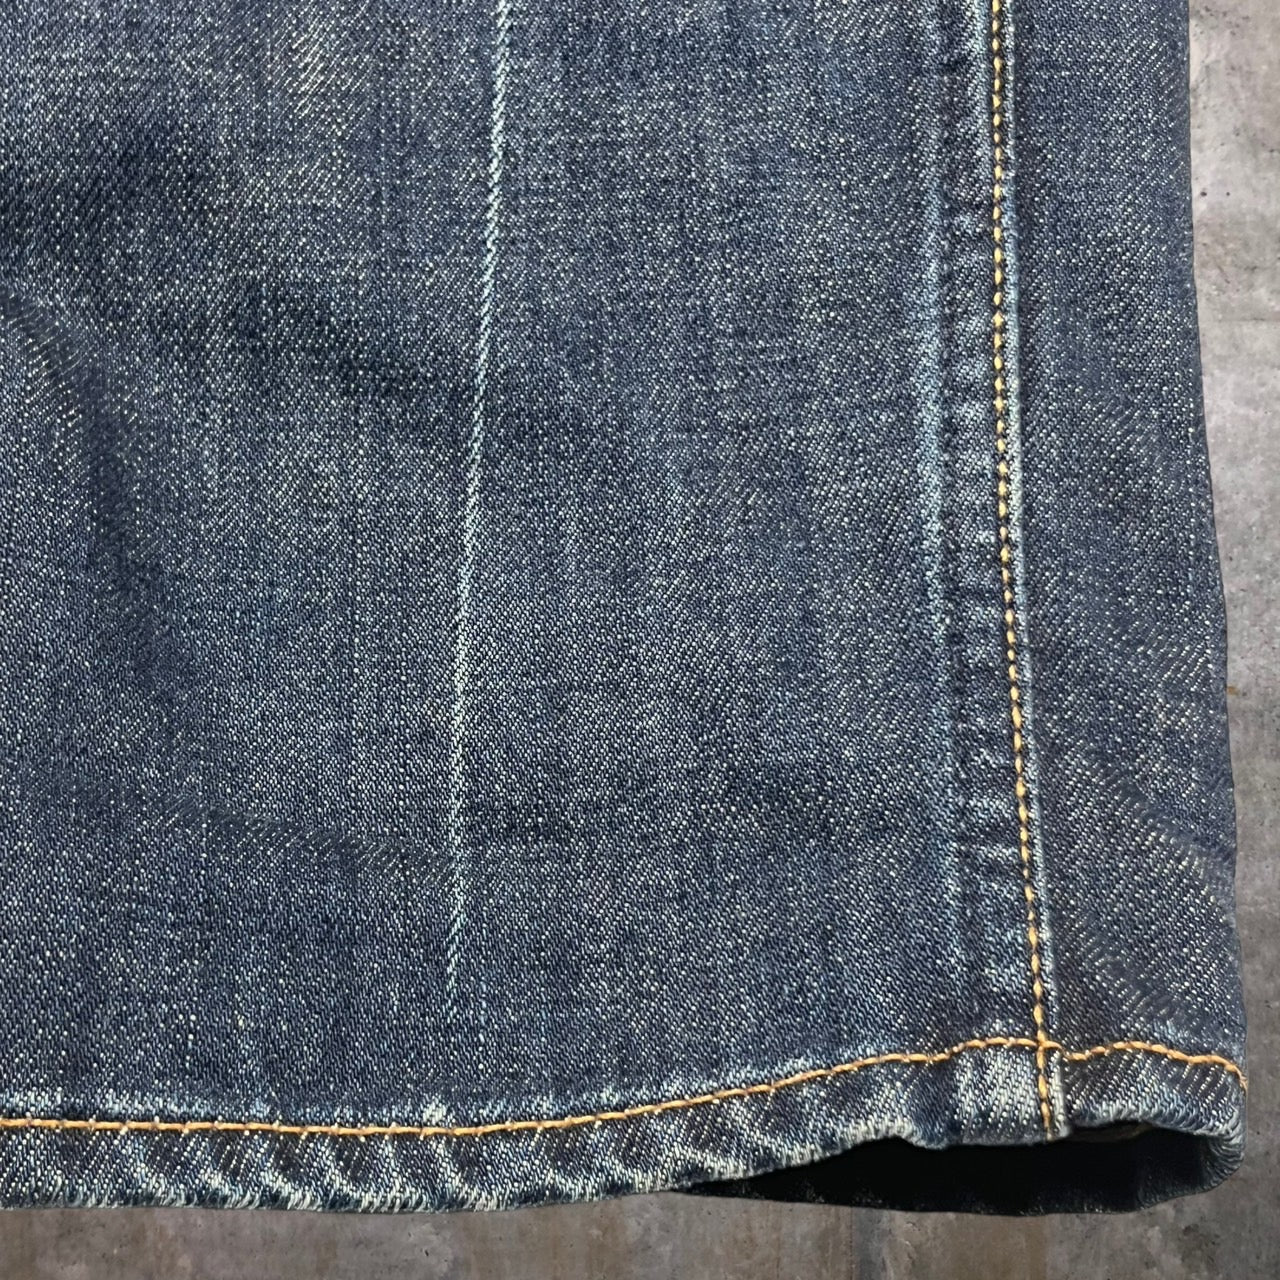 UNUSED(アンユーズド) 12oz Rigid Denim Five Pockets Pants/デニムパンツ 0(SXサイズ程度) ブルー